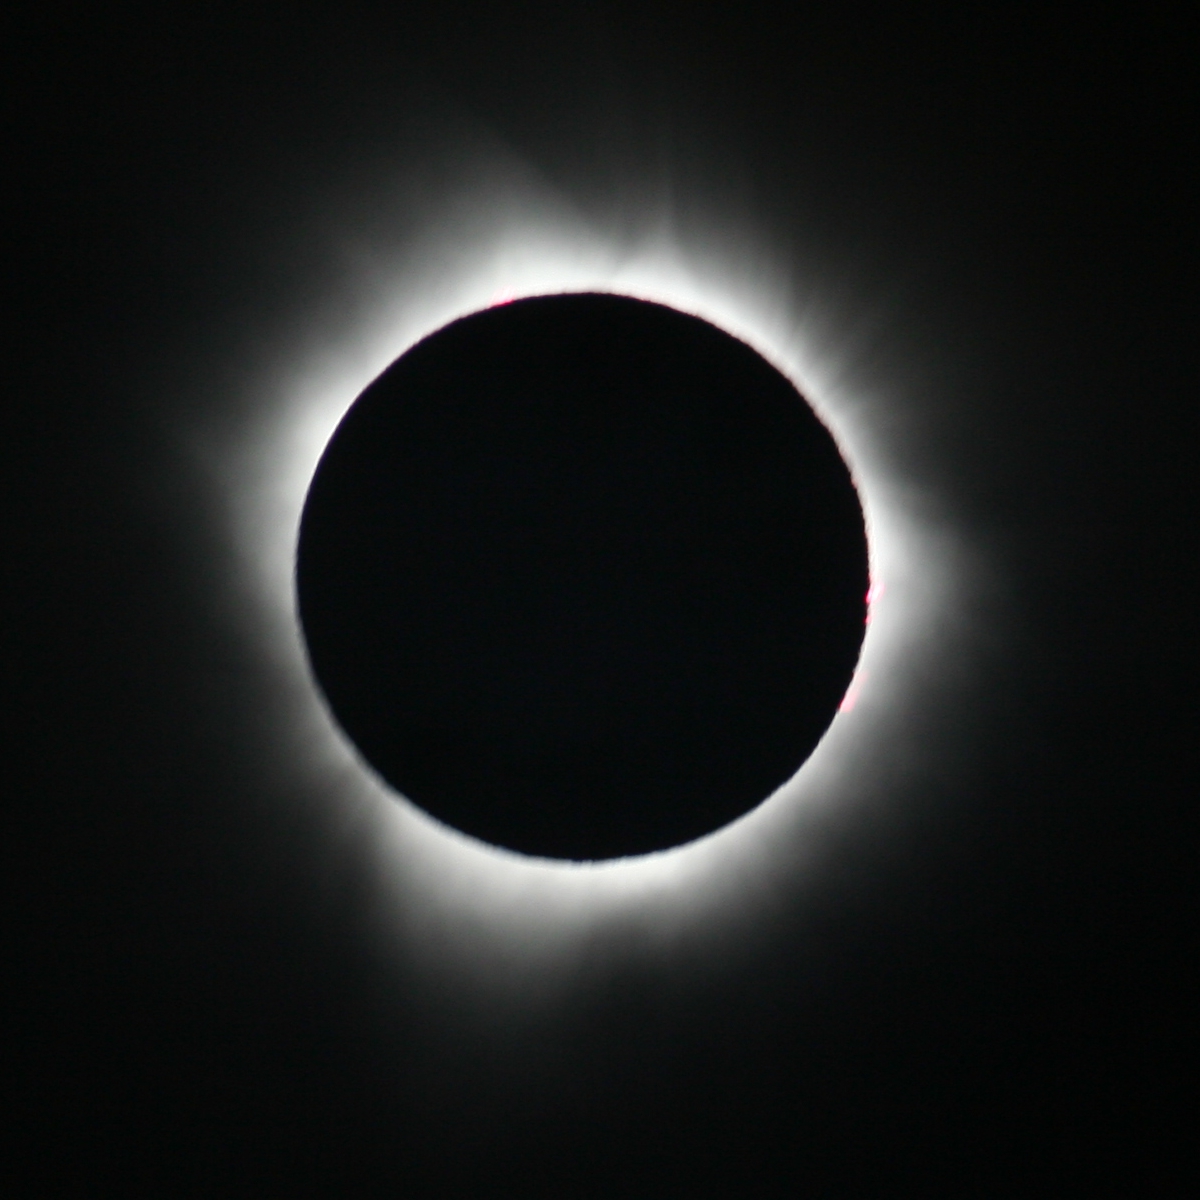 File:Eclipse 2010 Hao 1.JPG - Wikimedia Commons